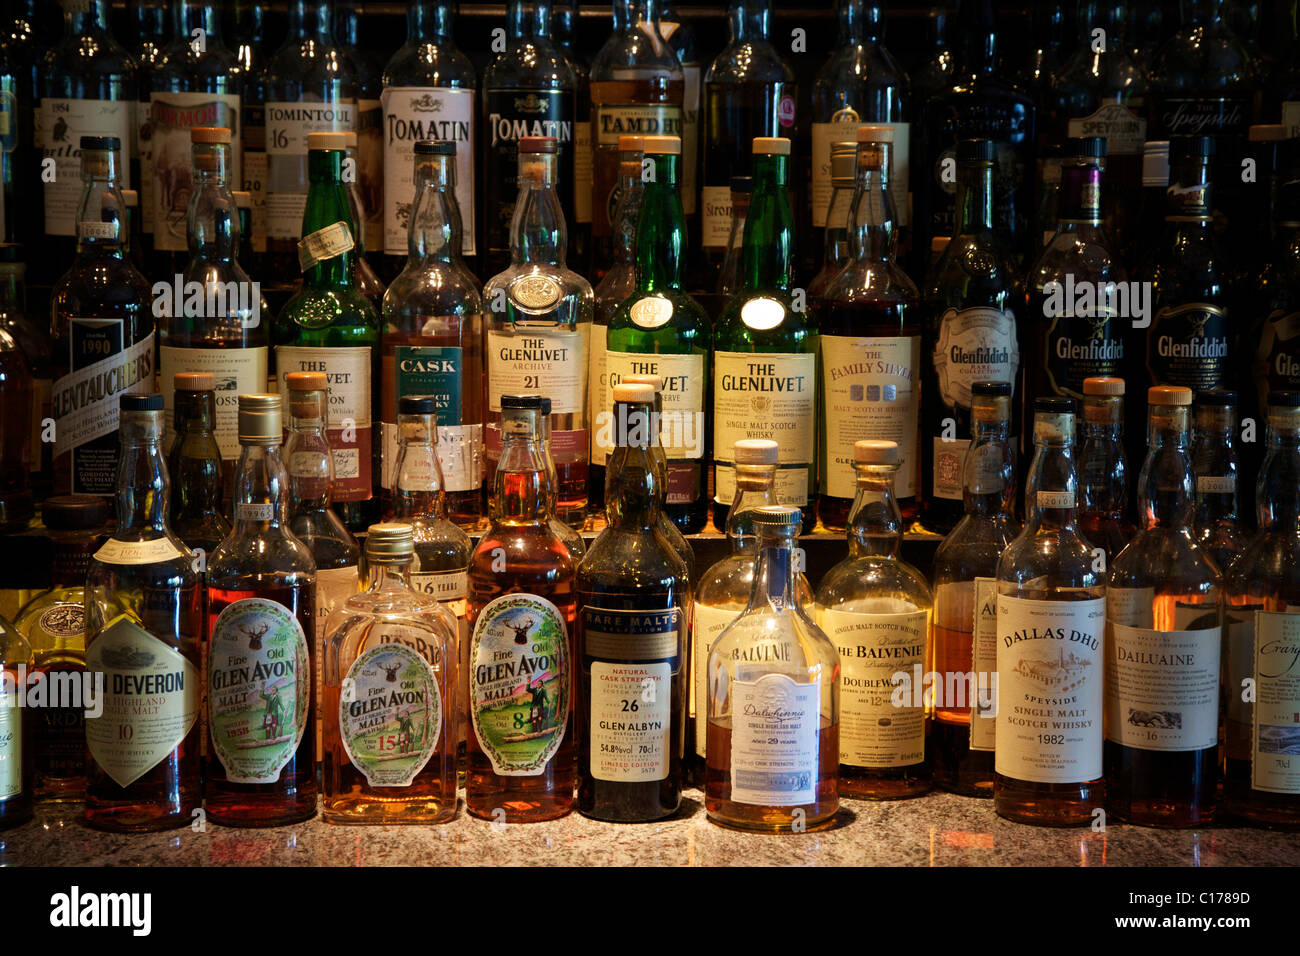 Bottles of Malt Scotch Whisky. Stock Photo